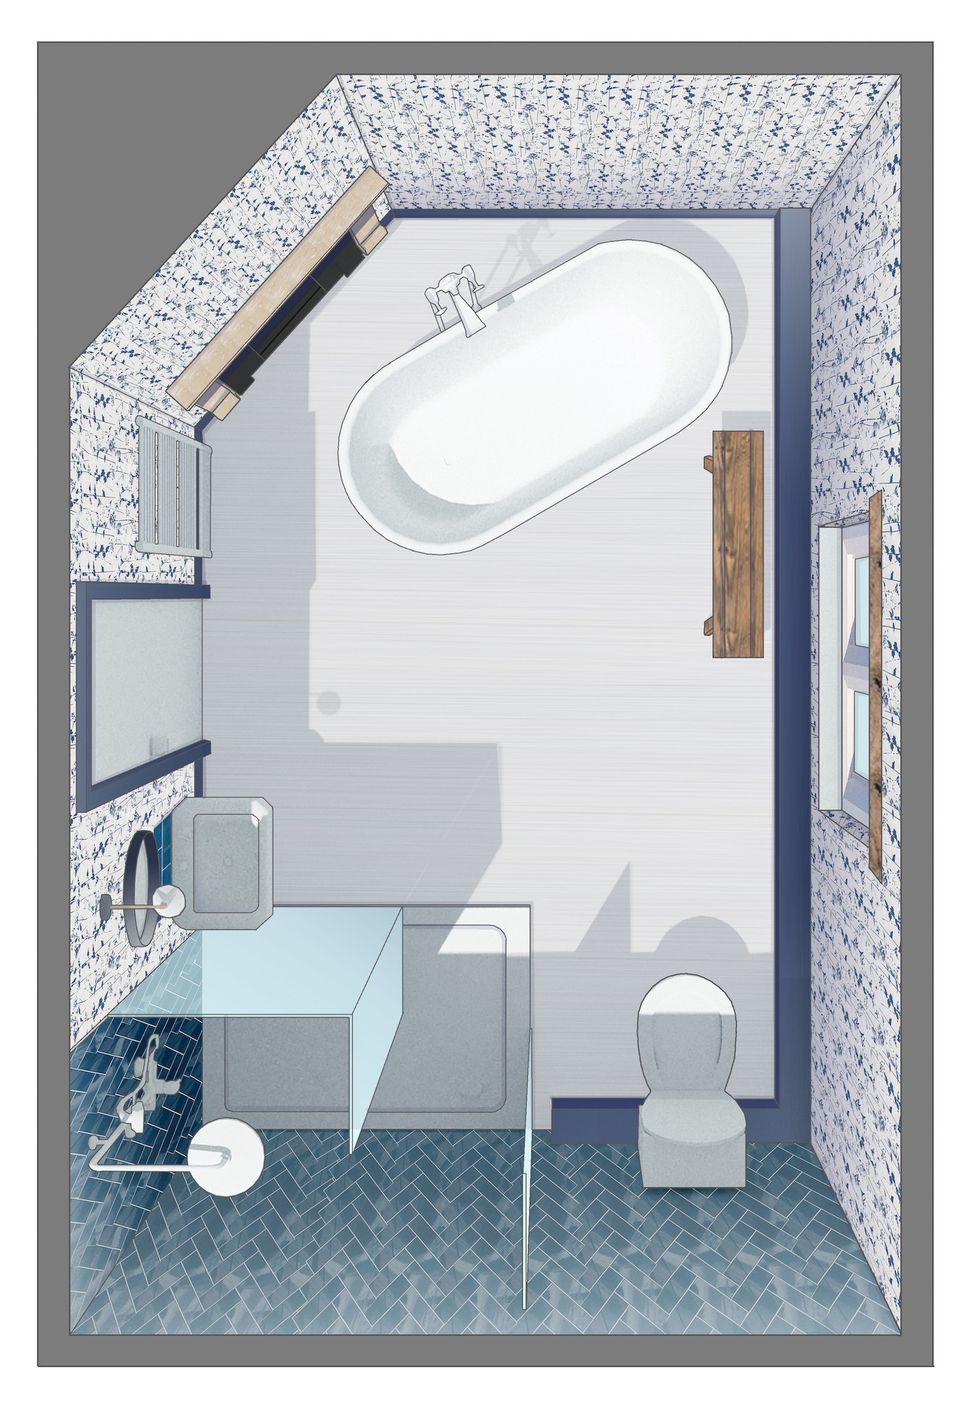 Bathroom plan, Emma Gordon, Halifax